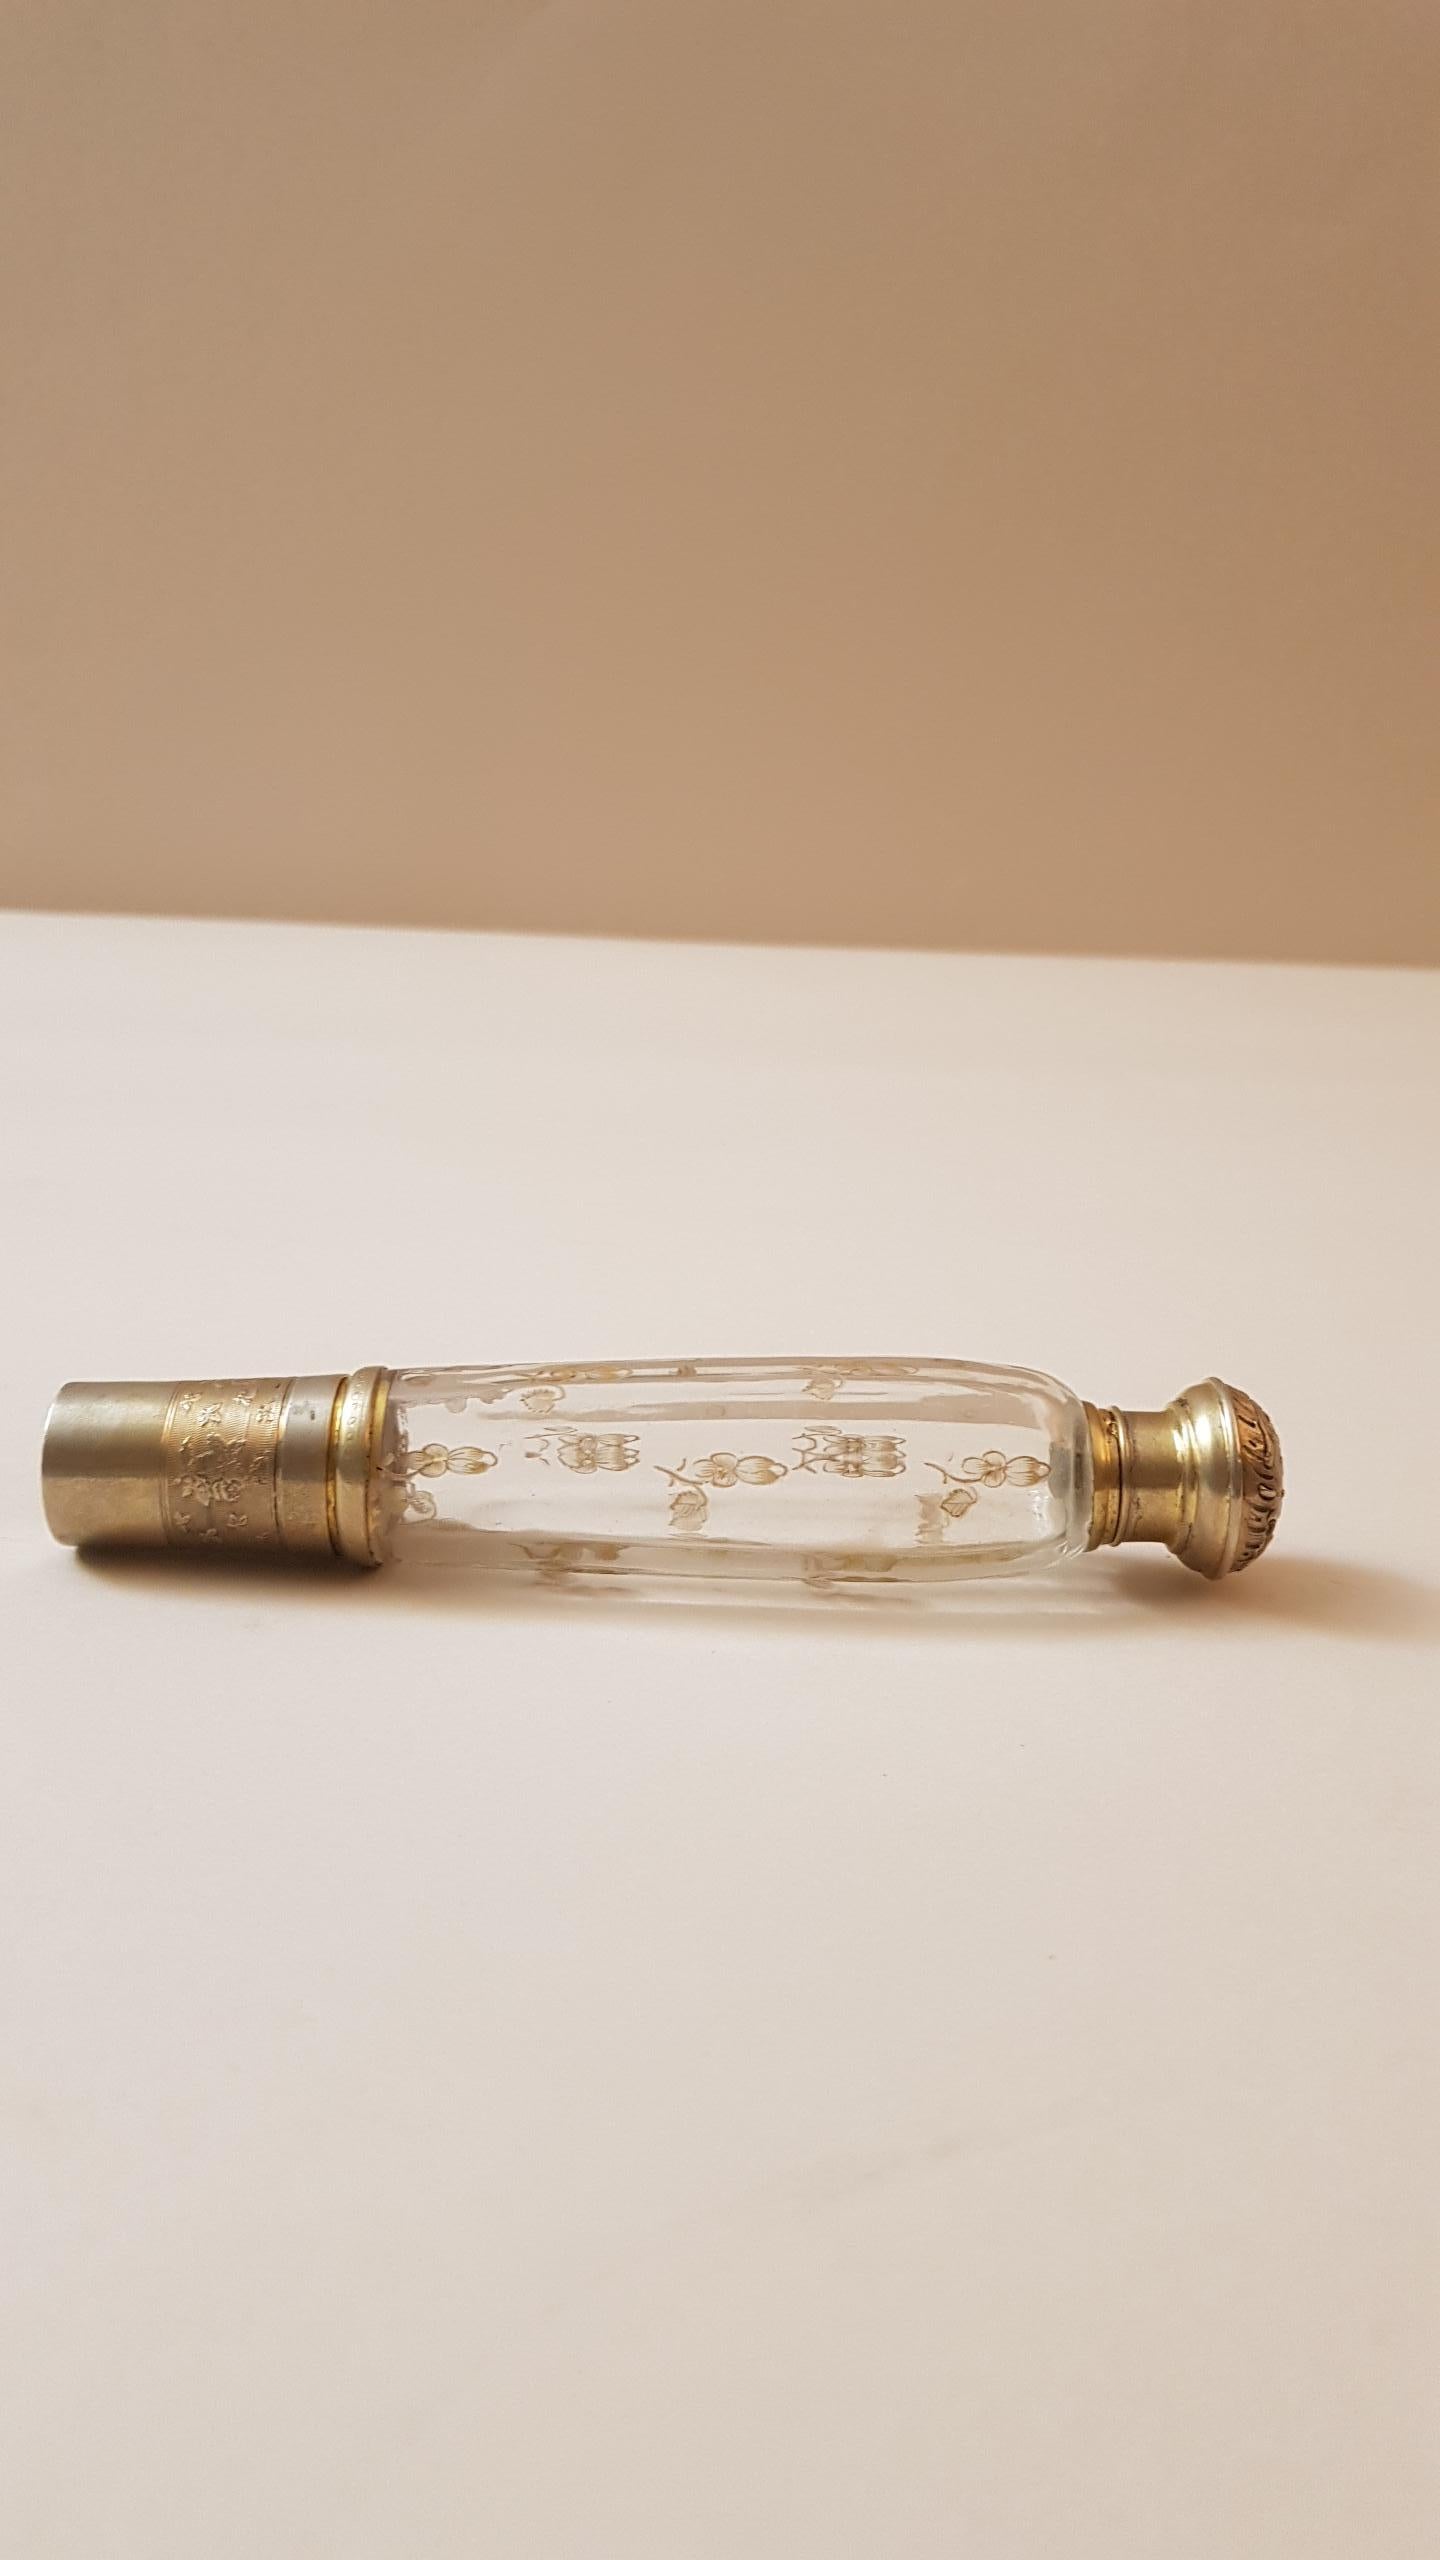 French Daum Art Nouveau France Glass Silver Liquor Holder, 1890 For Sale